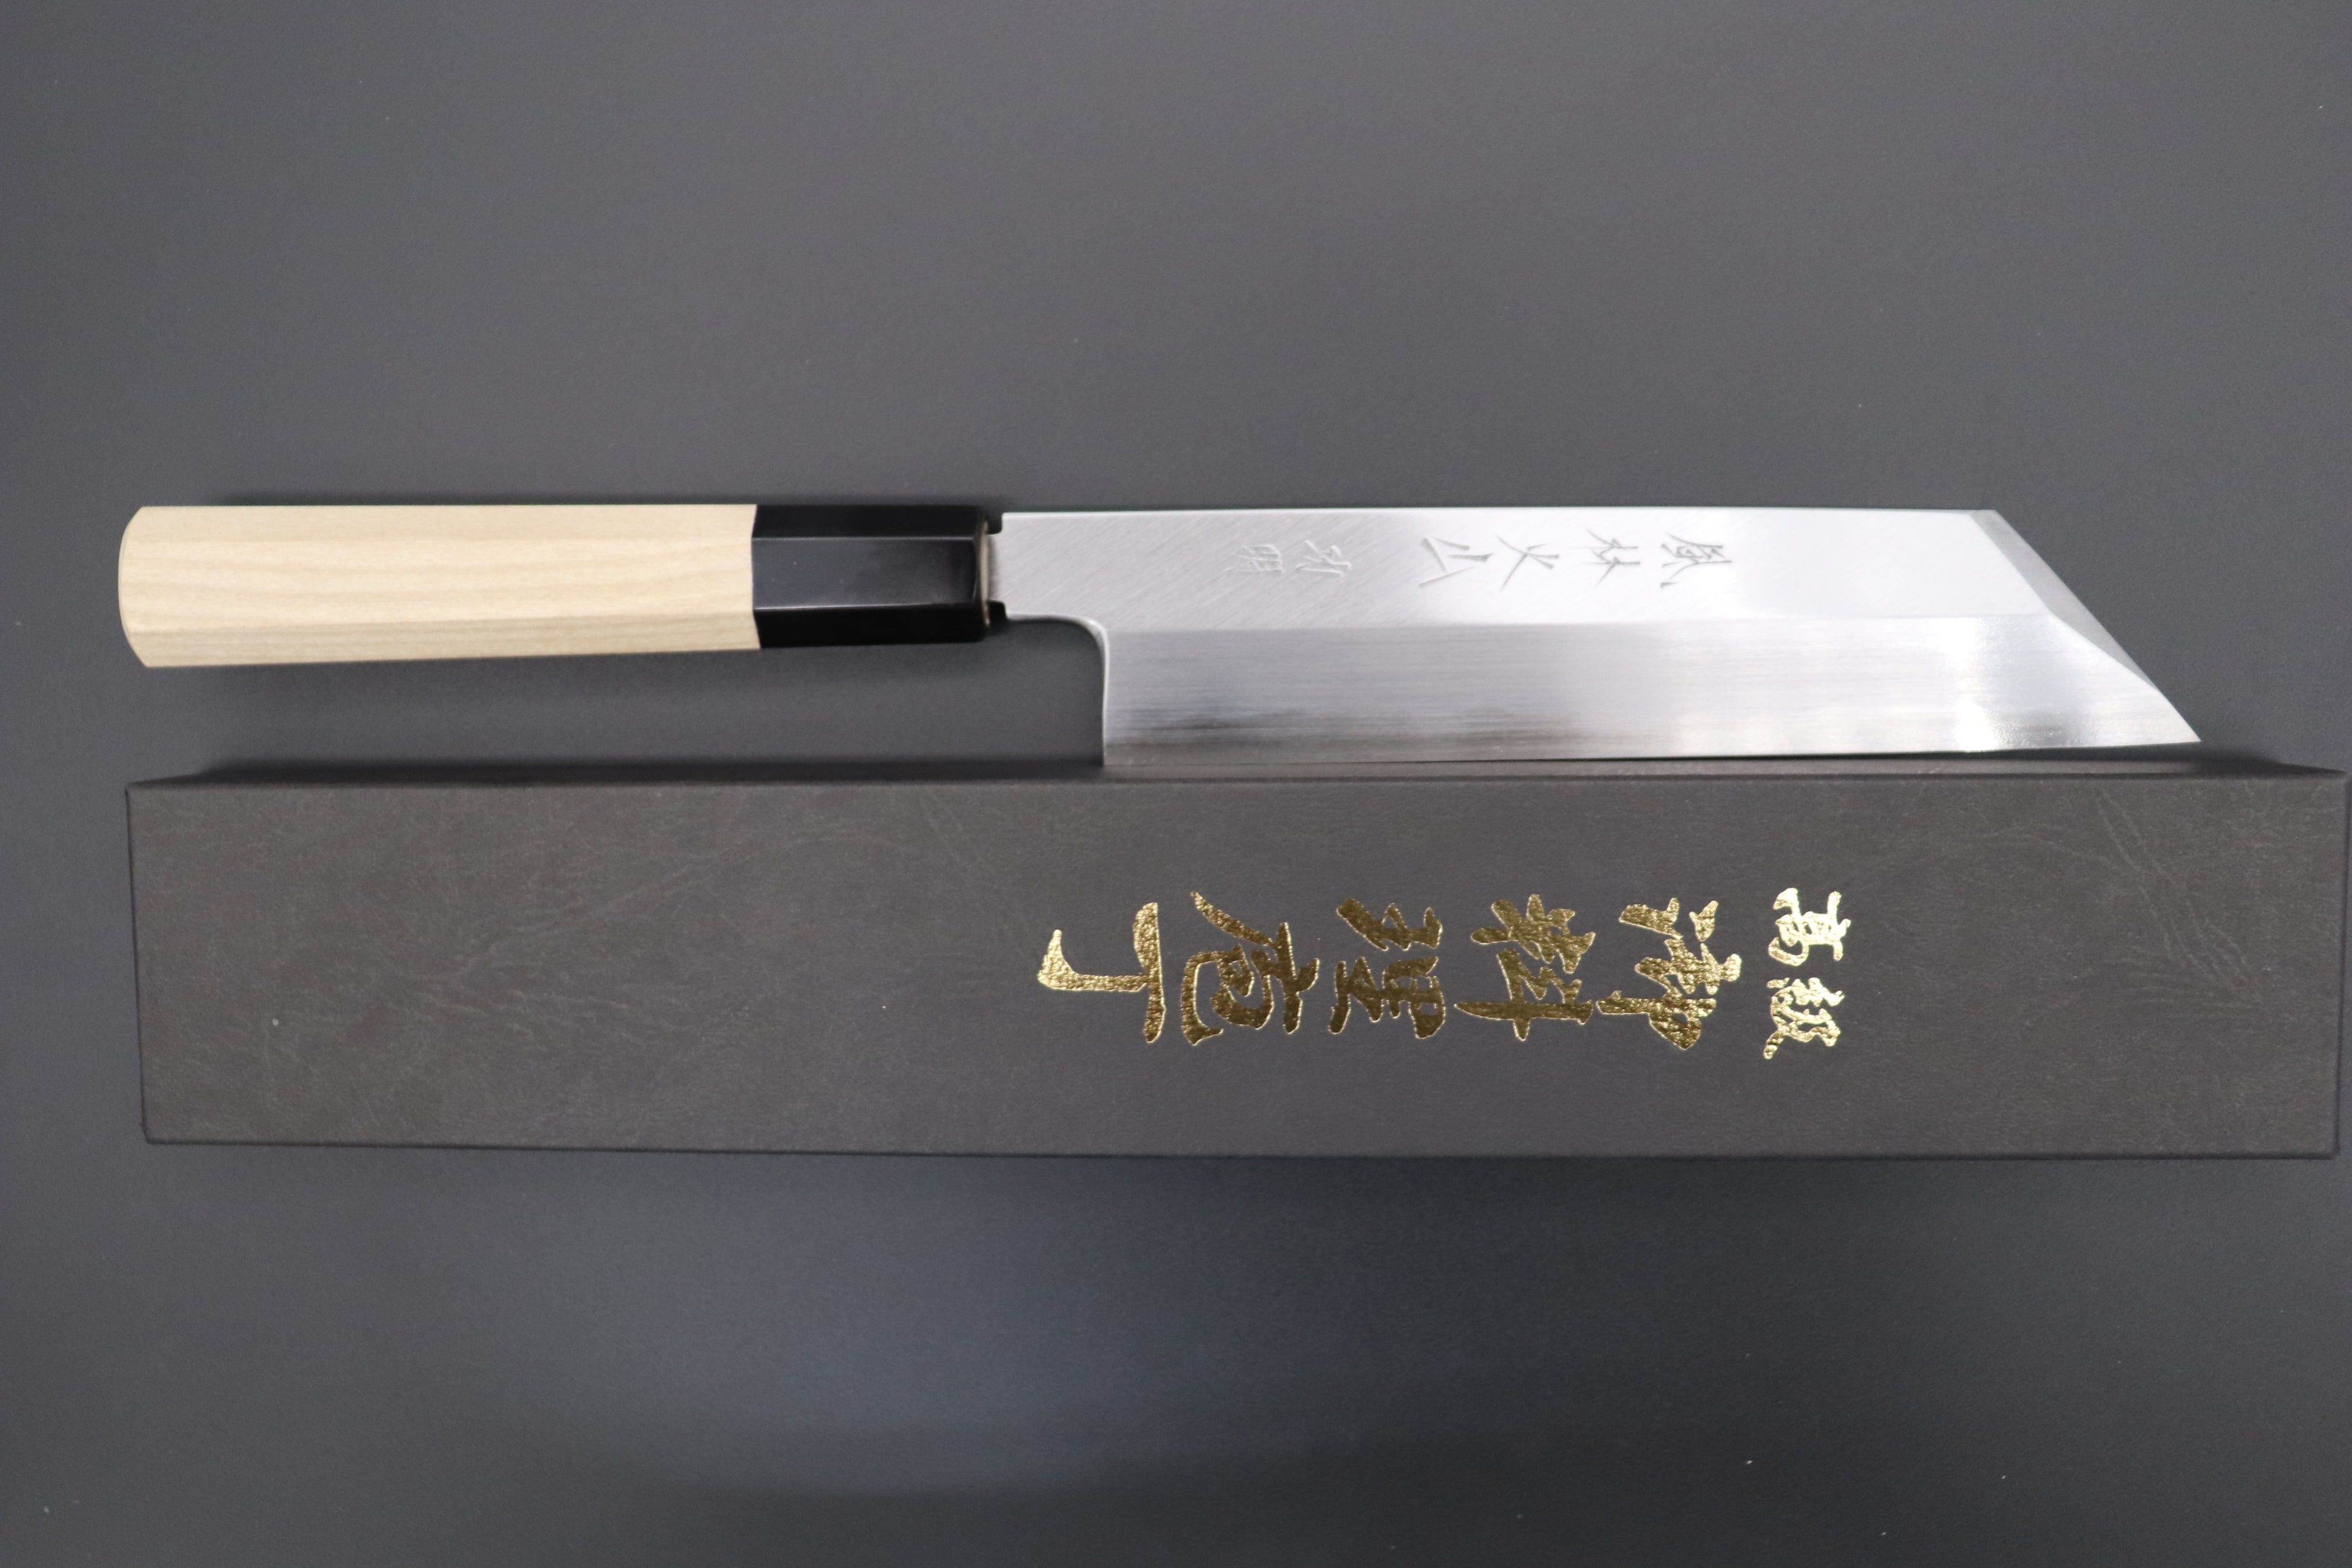 A Guide to Japanese Knives – Bokksu